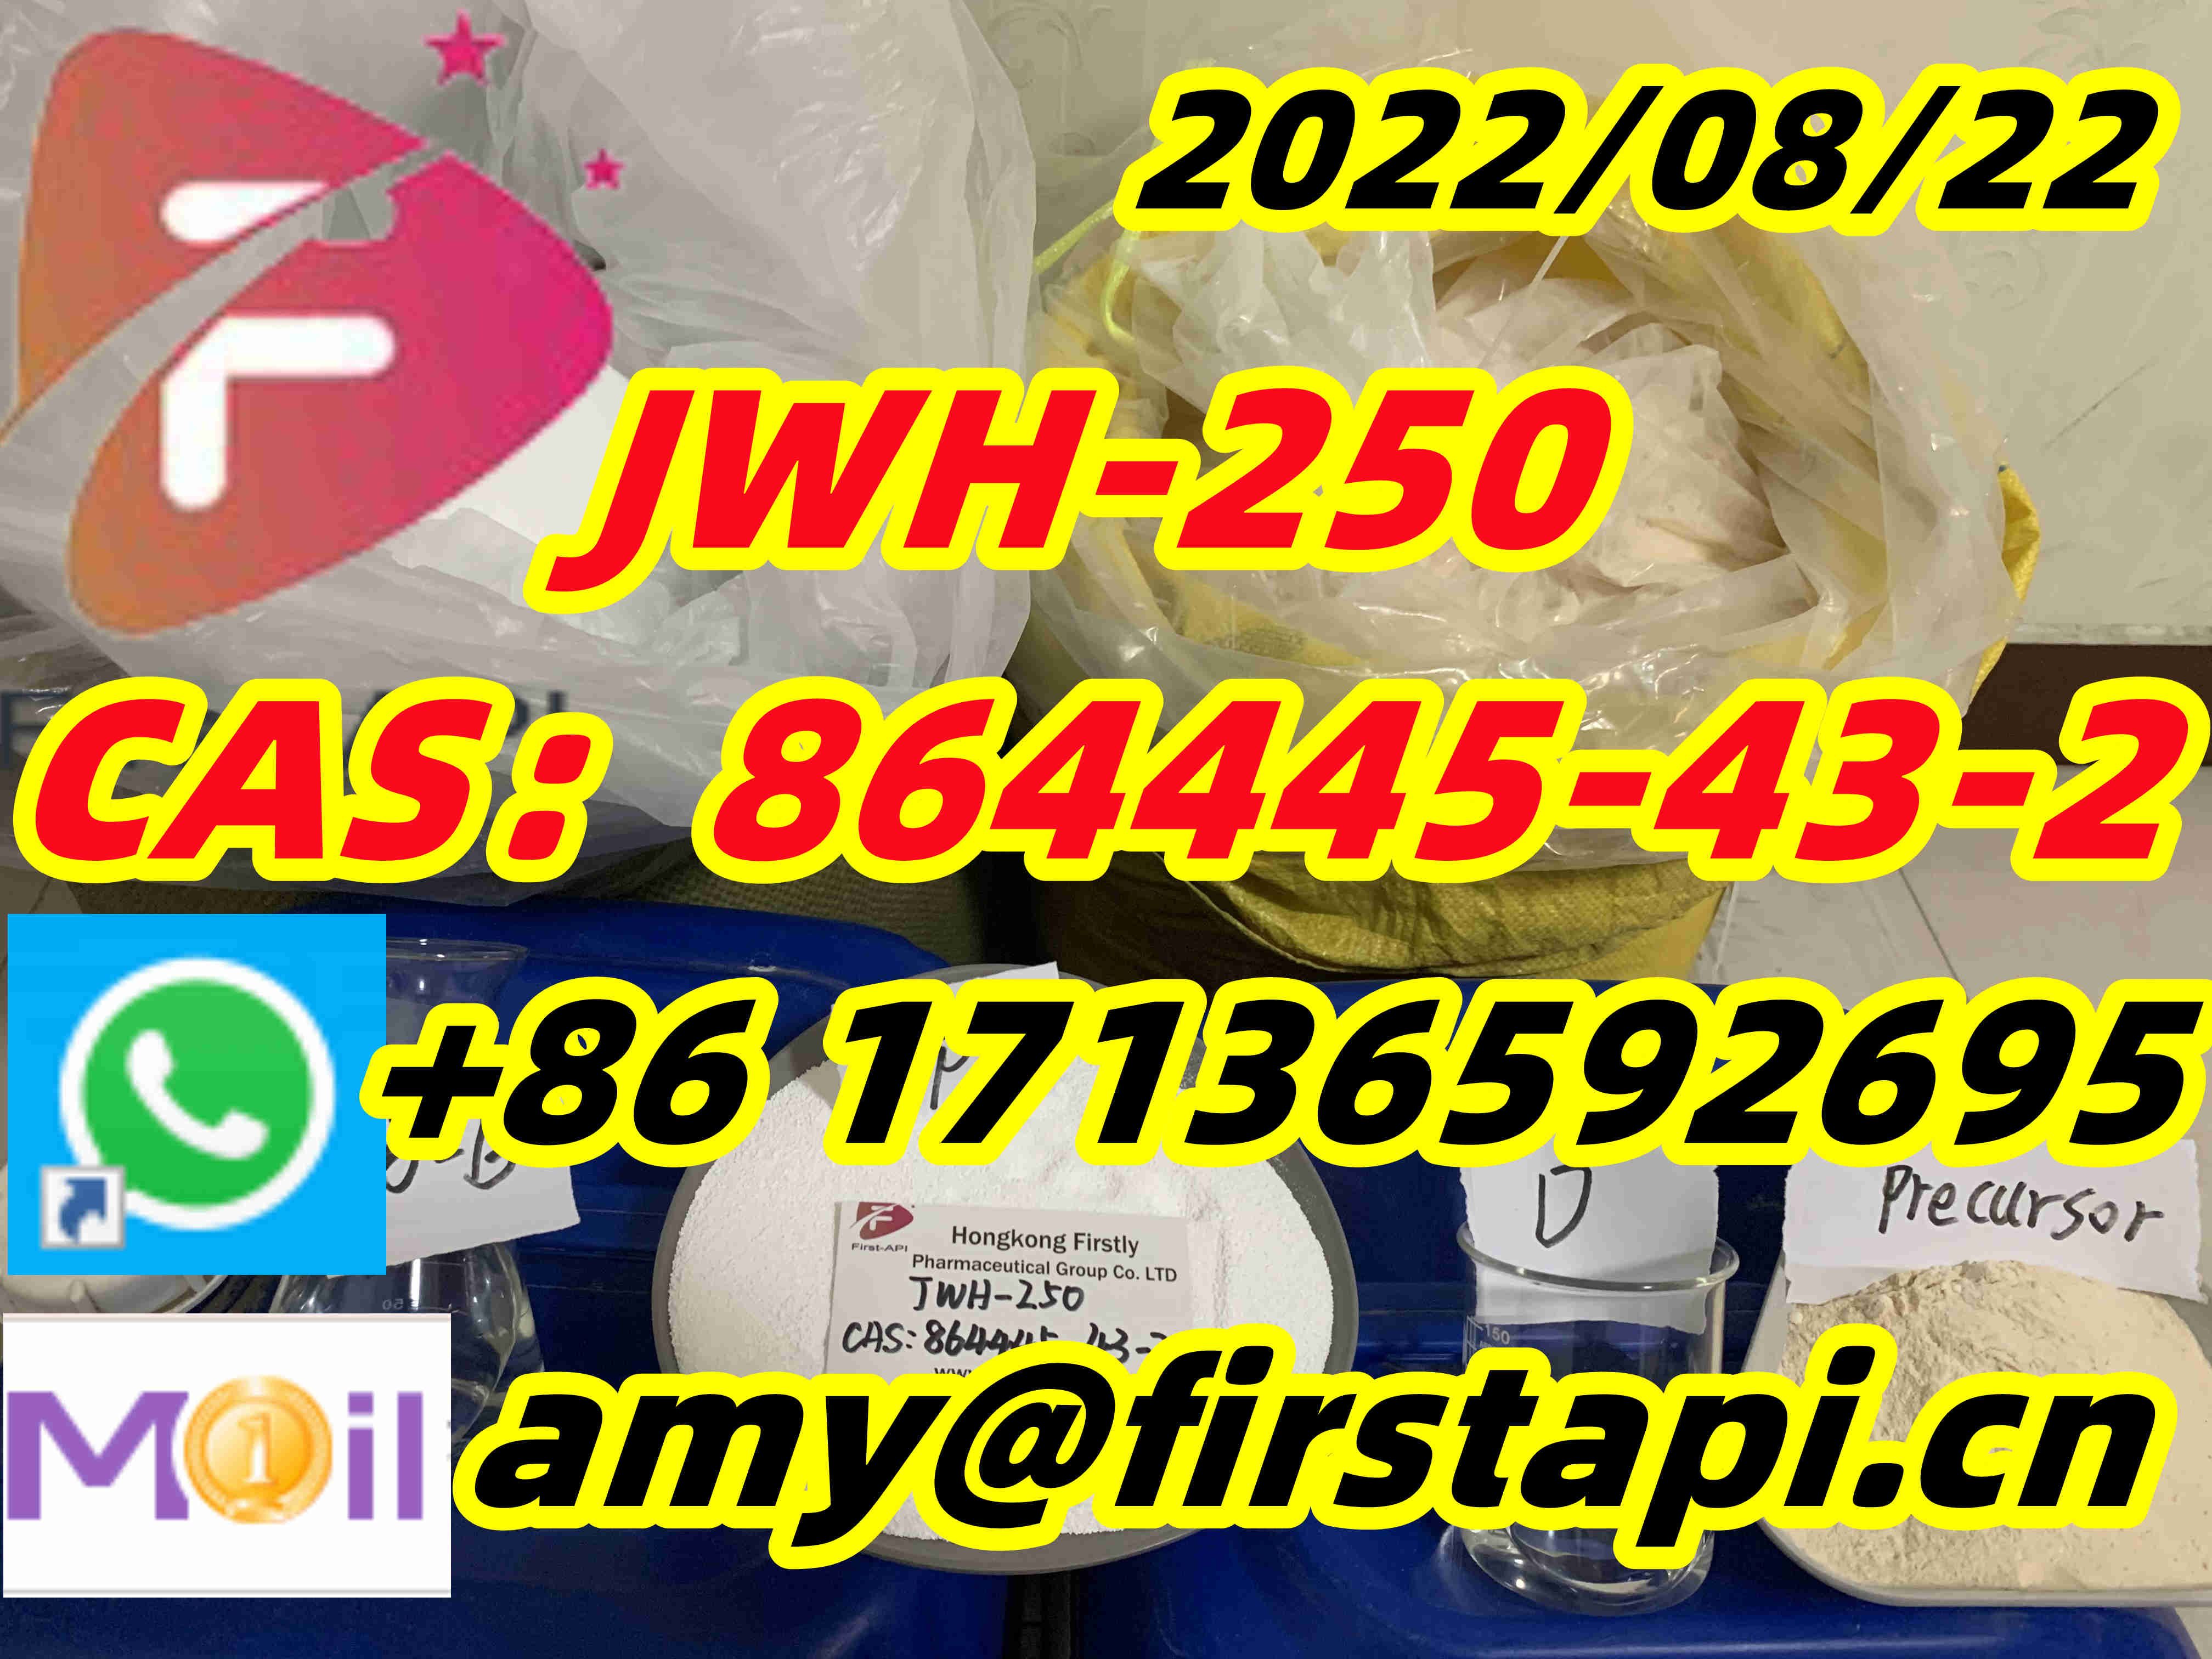 JWH-250,high quality,low price,CAS:864445-43-2,cannabicyclohexanol - photo